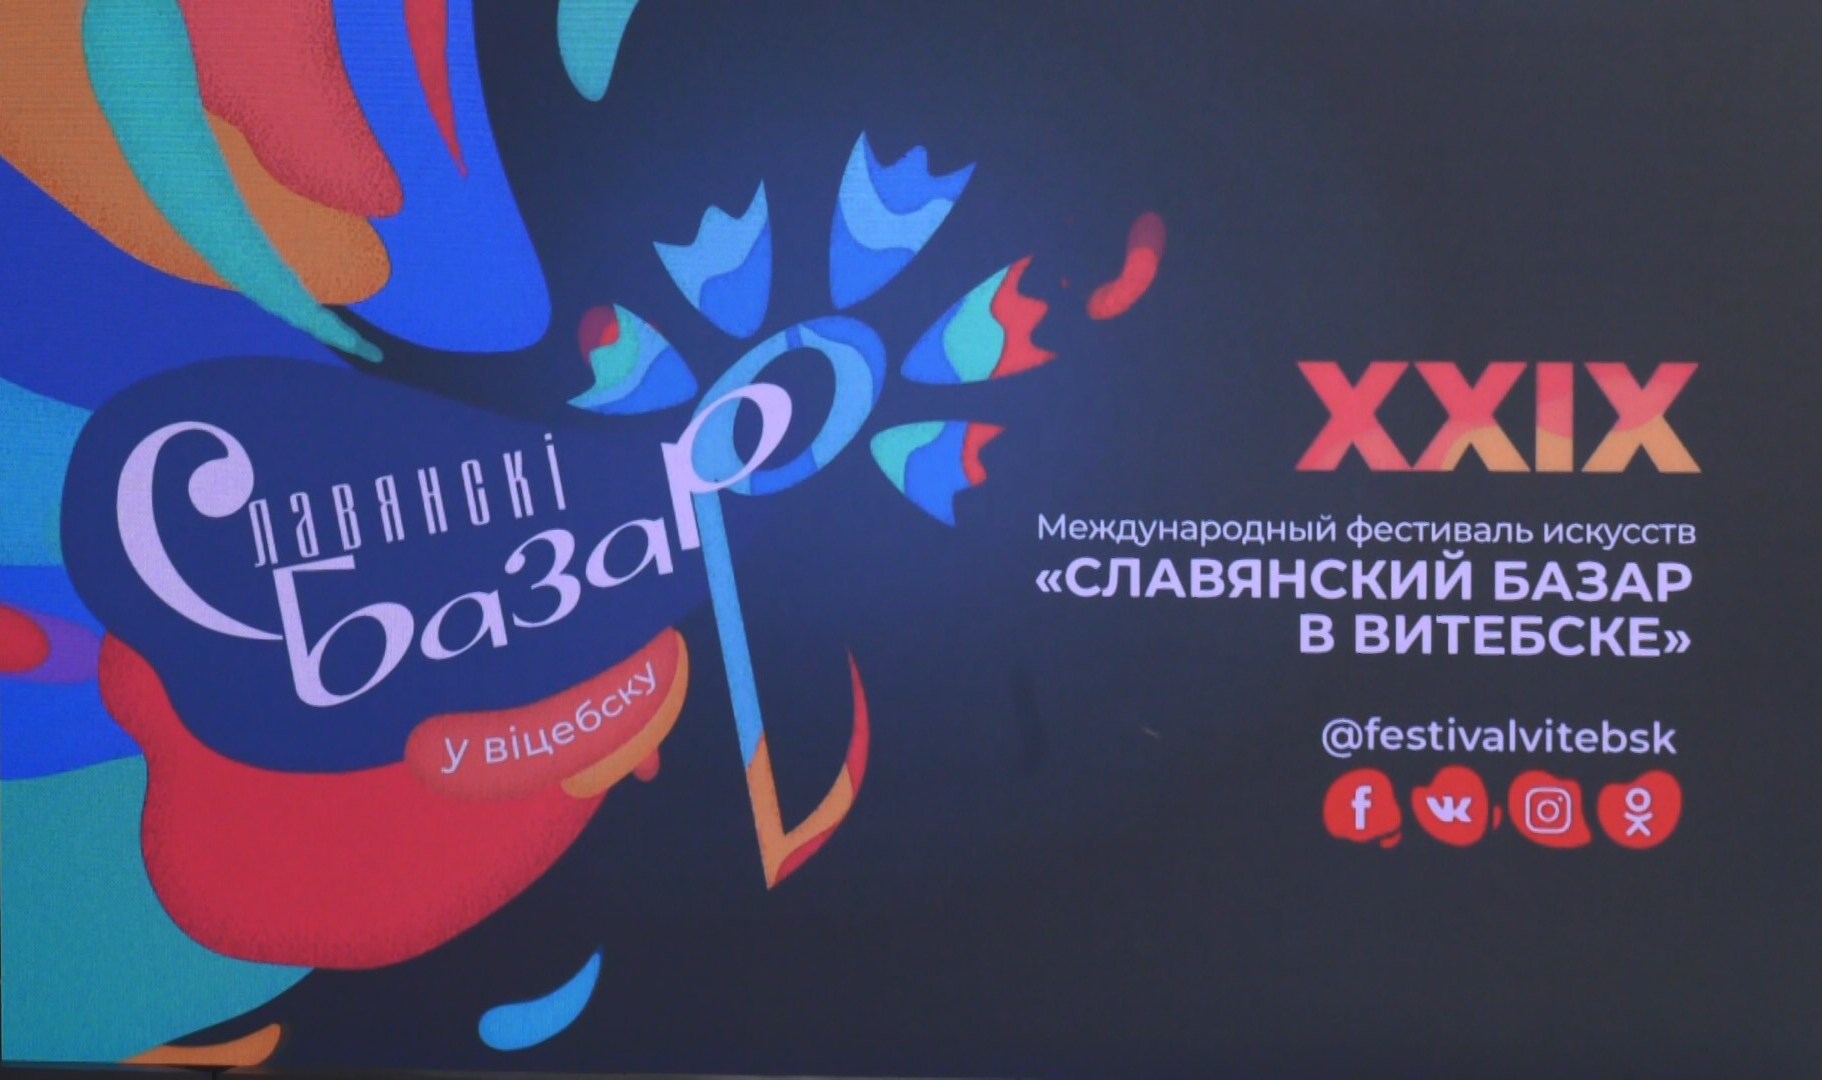 Slavianski Bazaar Arts Festival kicks off in Vitebsk